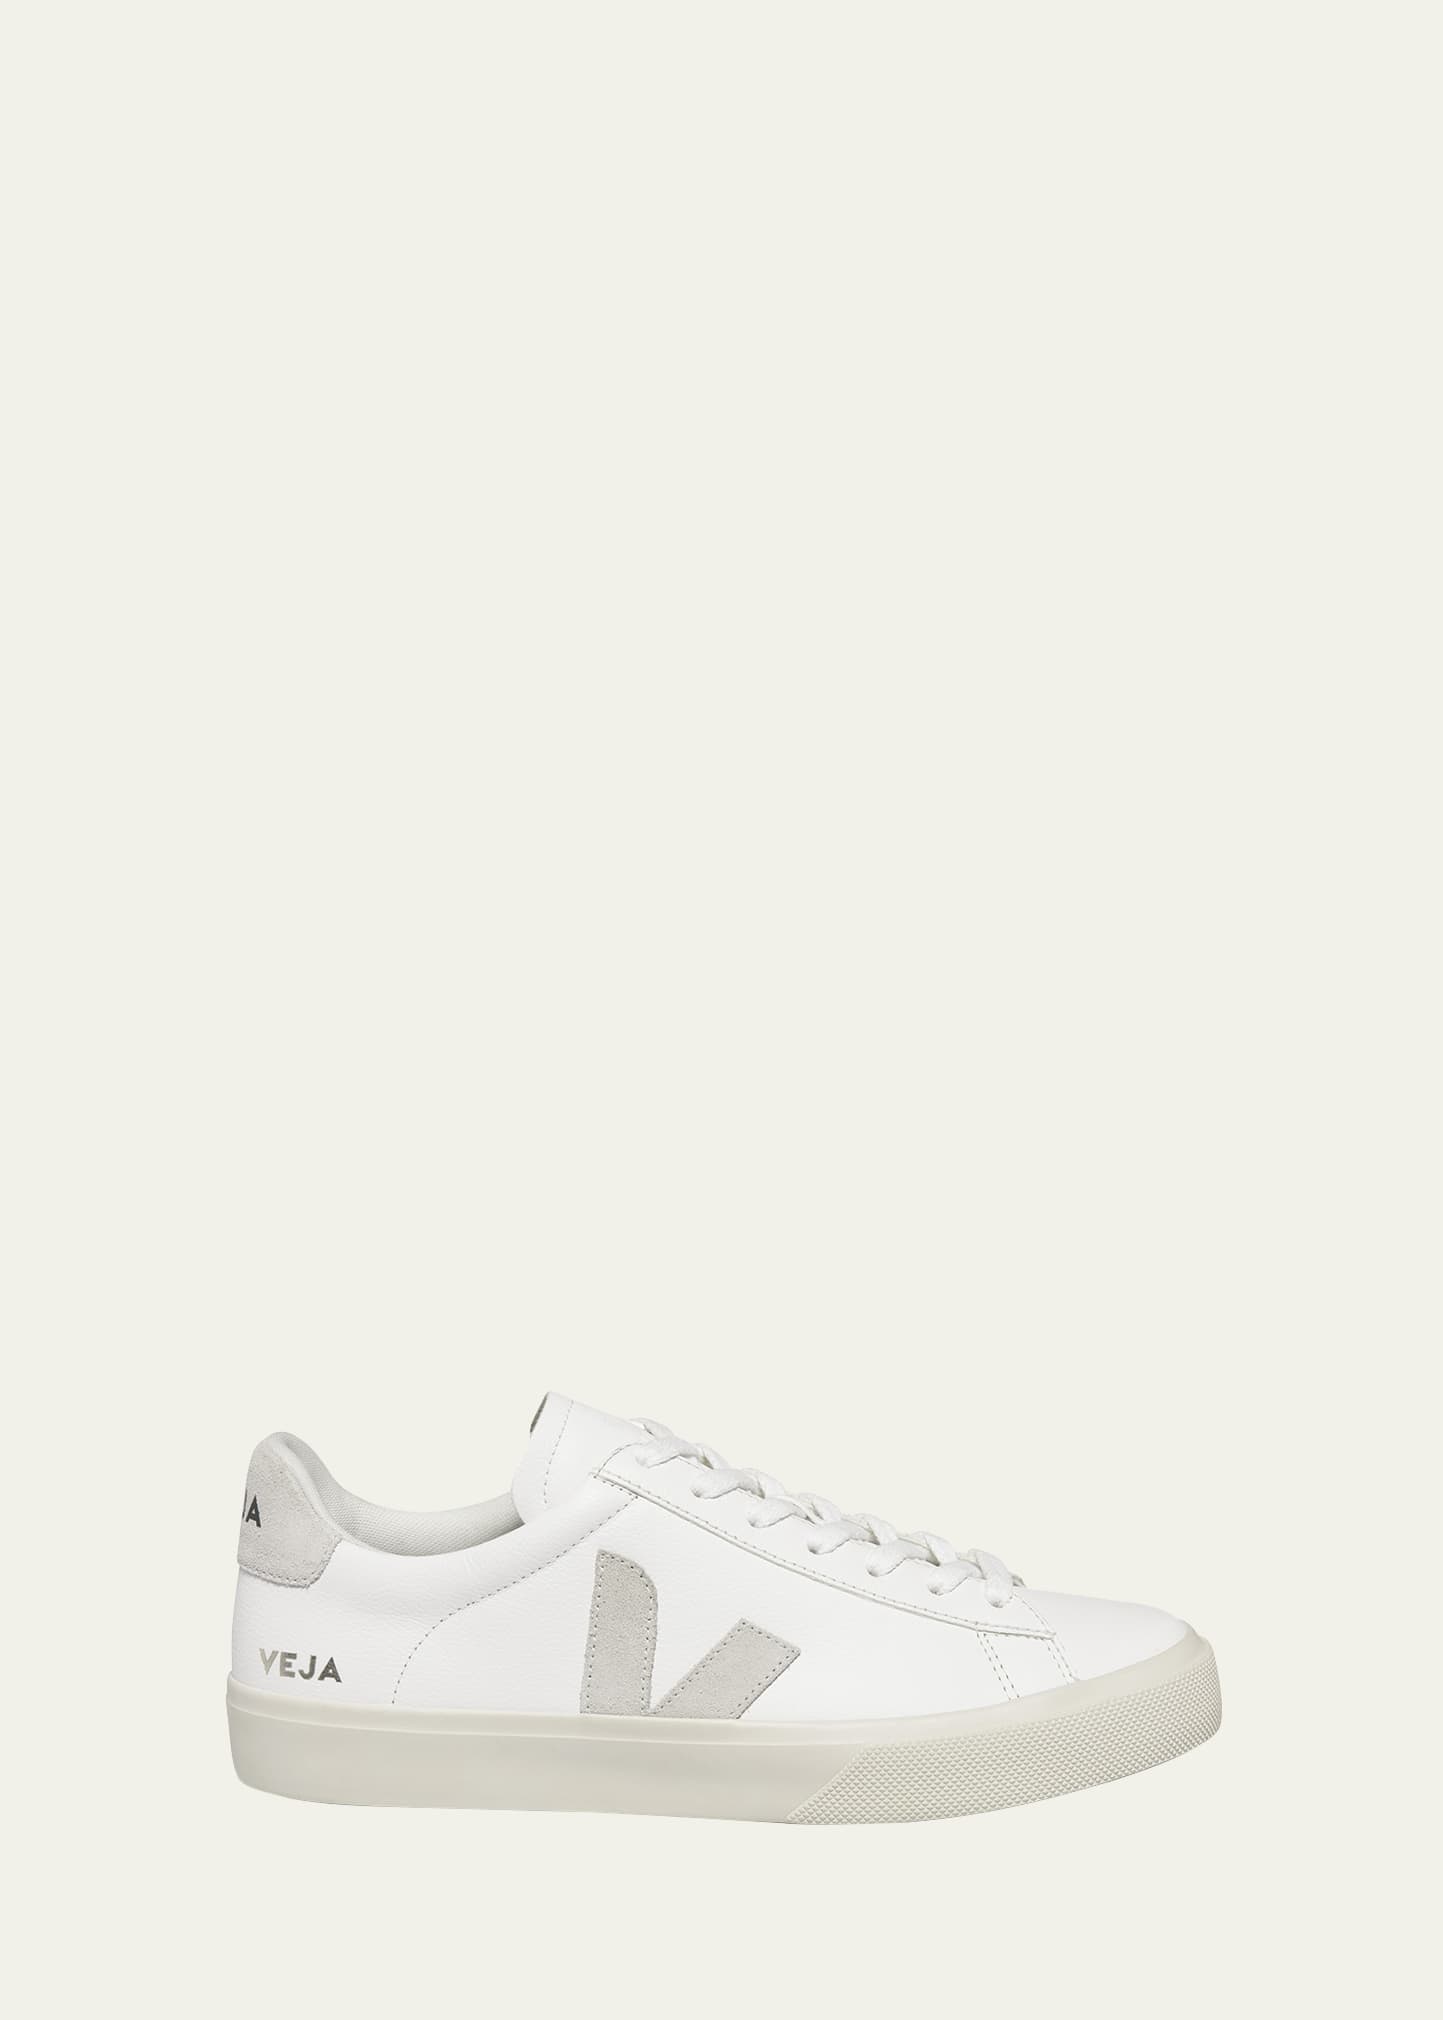 VEJA Campo Bicolor Leather Low-Top Sneakers | Bergdorf Goodman